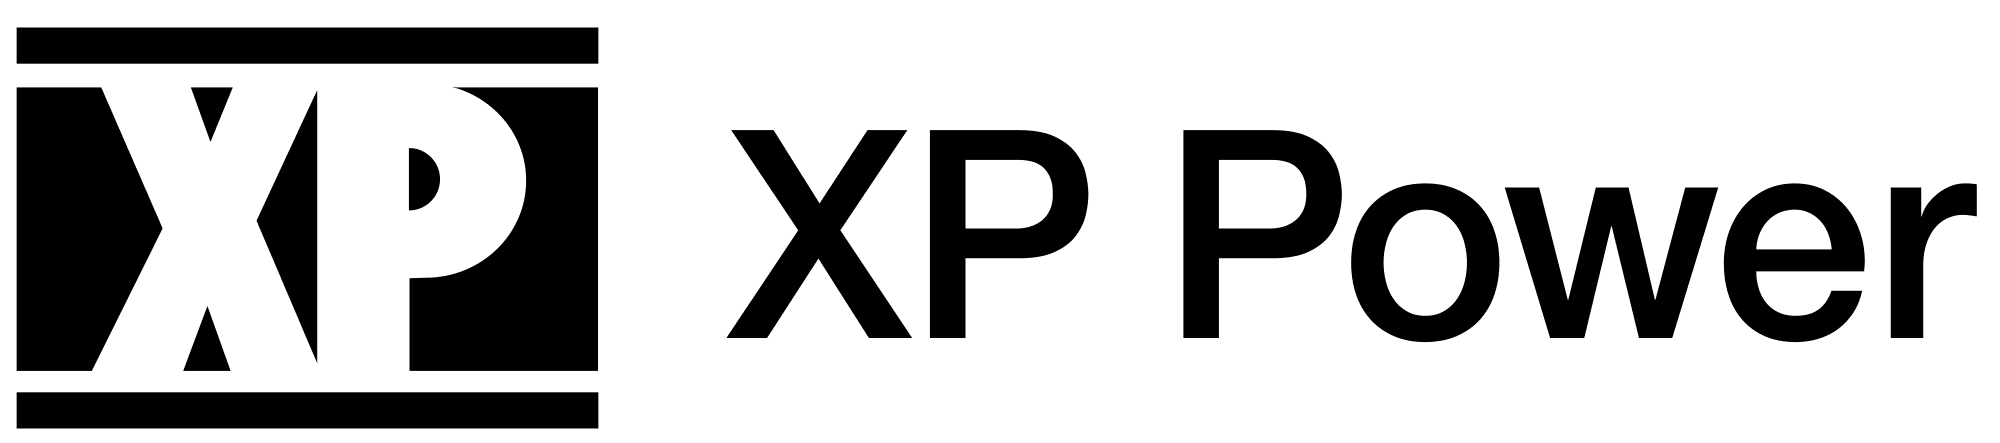 XP POWER Logo